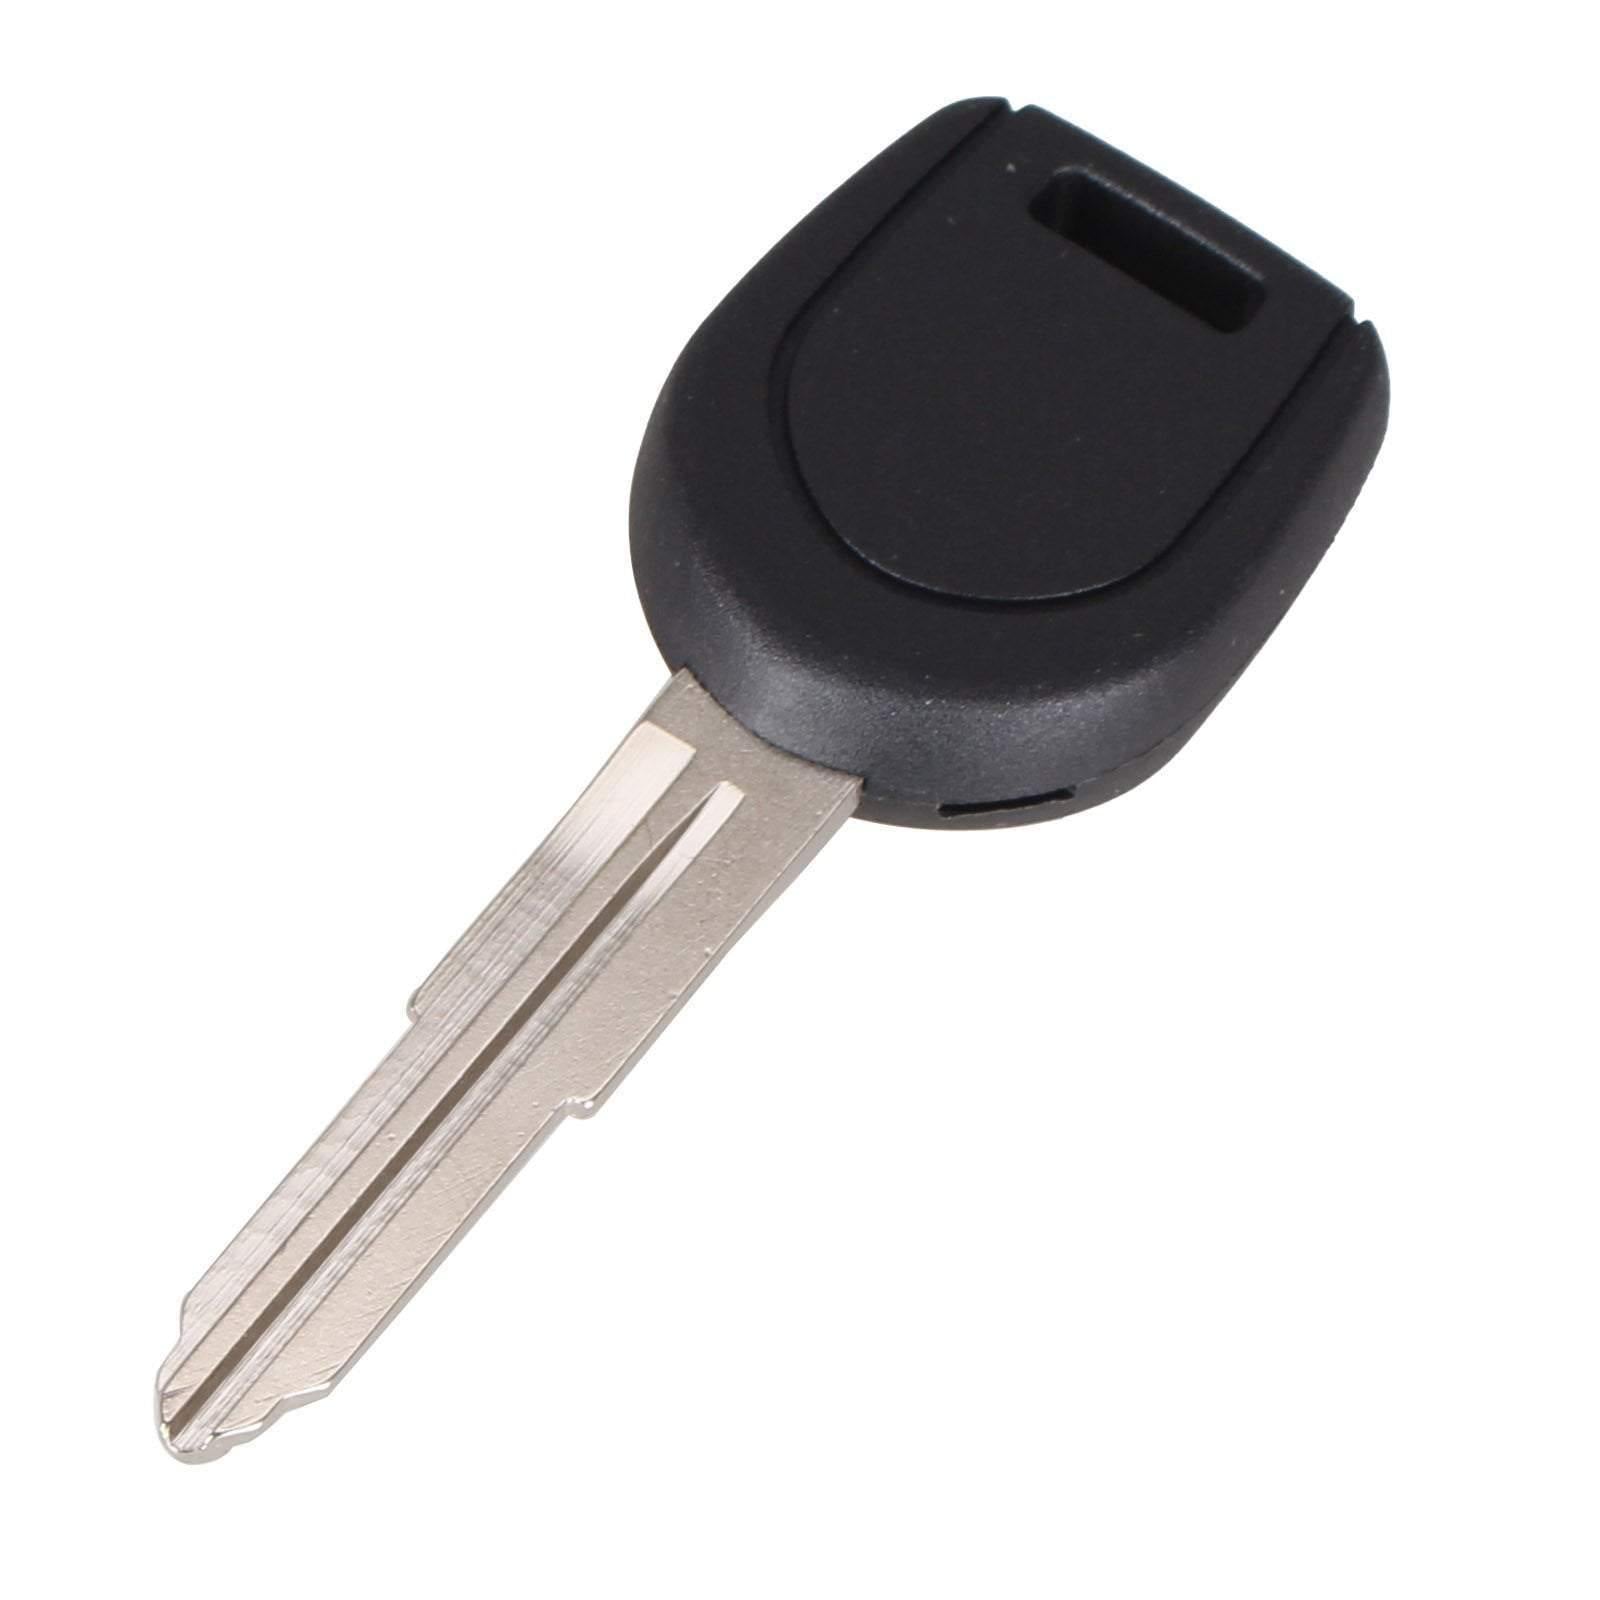 Fekete színű Mitsubishi kulcs, kulcsház